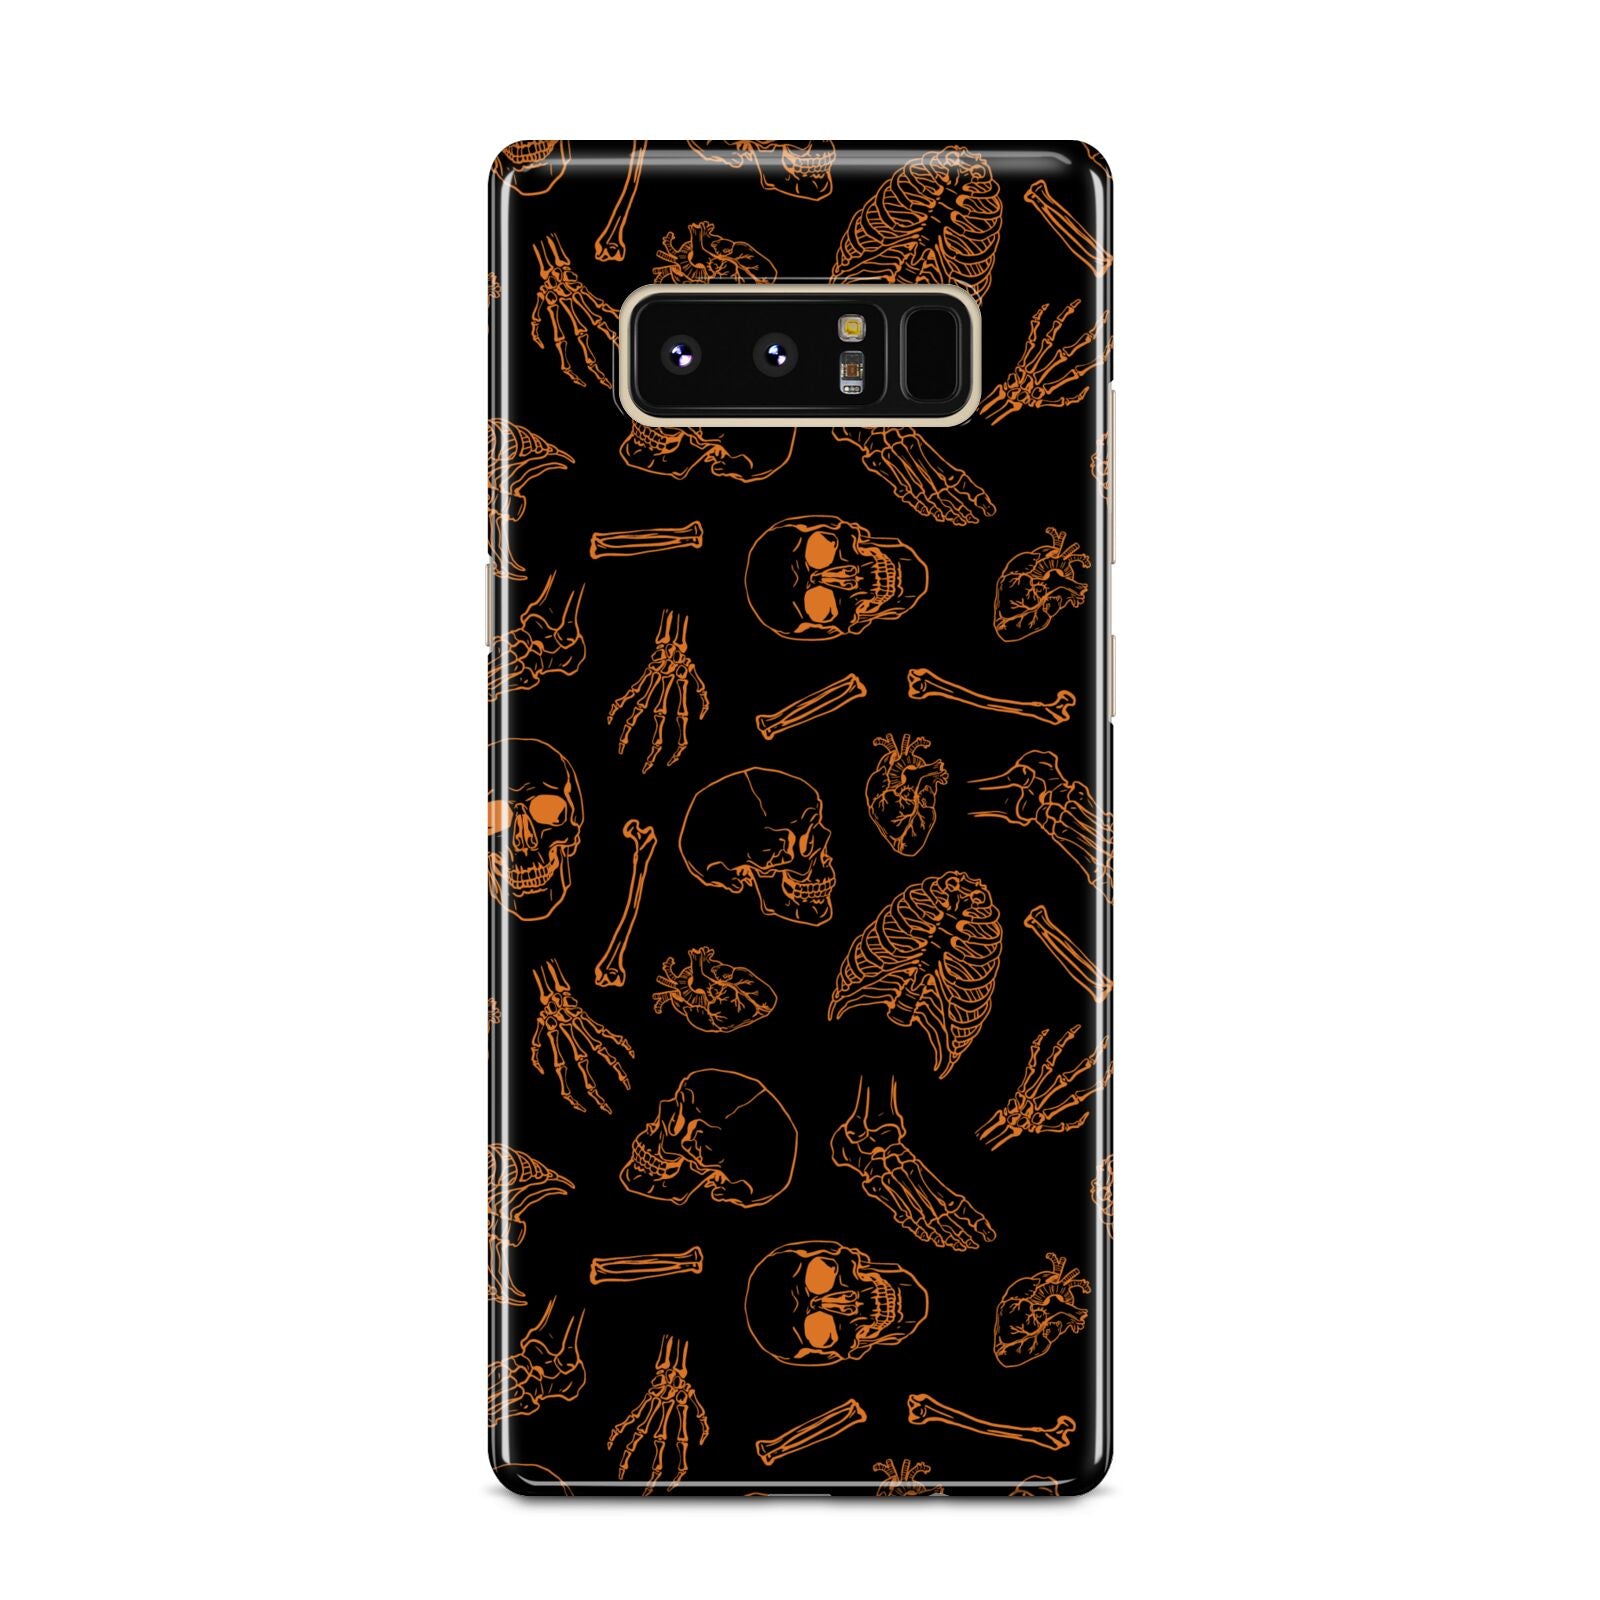 Orange Skeleton Illustrations Samsung Galaxy Note 8 Case